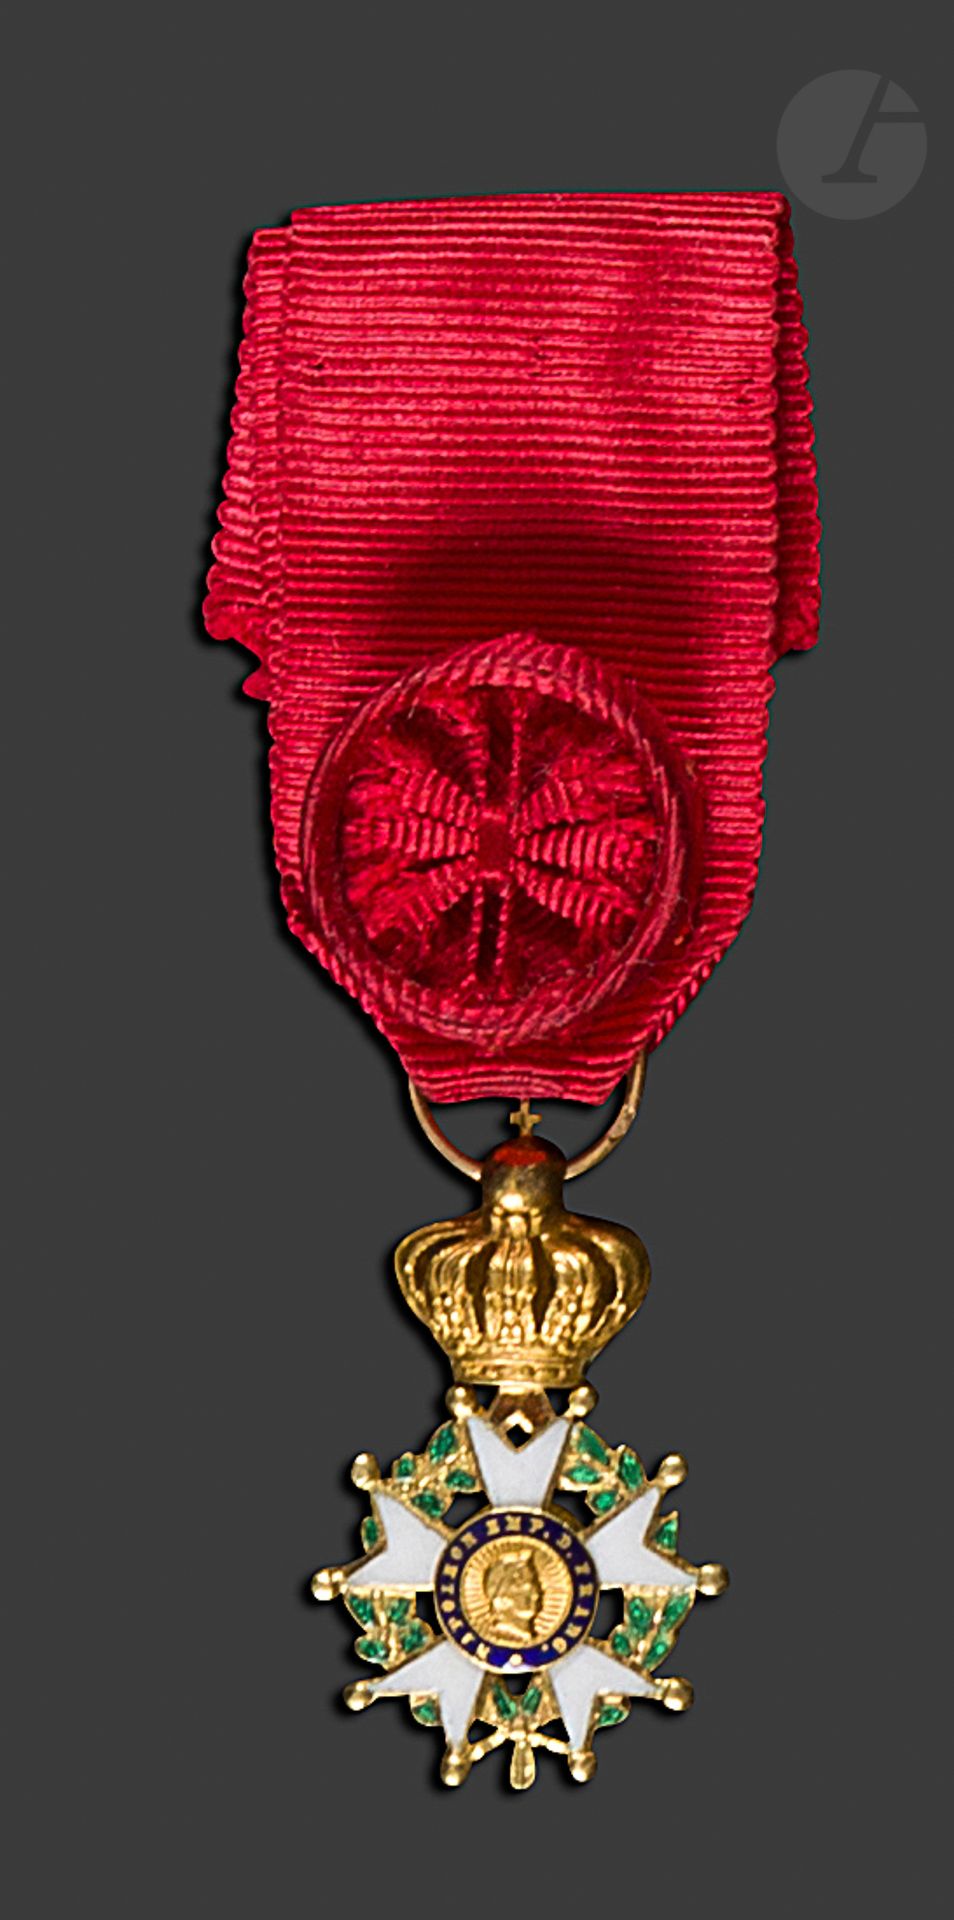 Null 法国
荣誉
军团
勋章
第二帝国时期的微缩军官之星。
以黄金和珐琅为材料。
21 x 18 mm - 毛重：3 gT
.
T
.B. To SUP

&hellip;